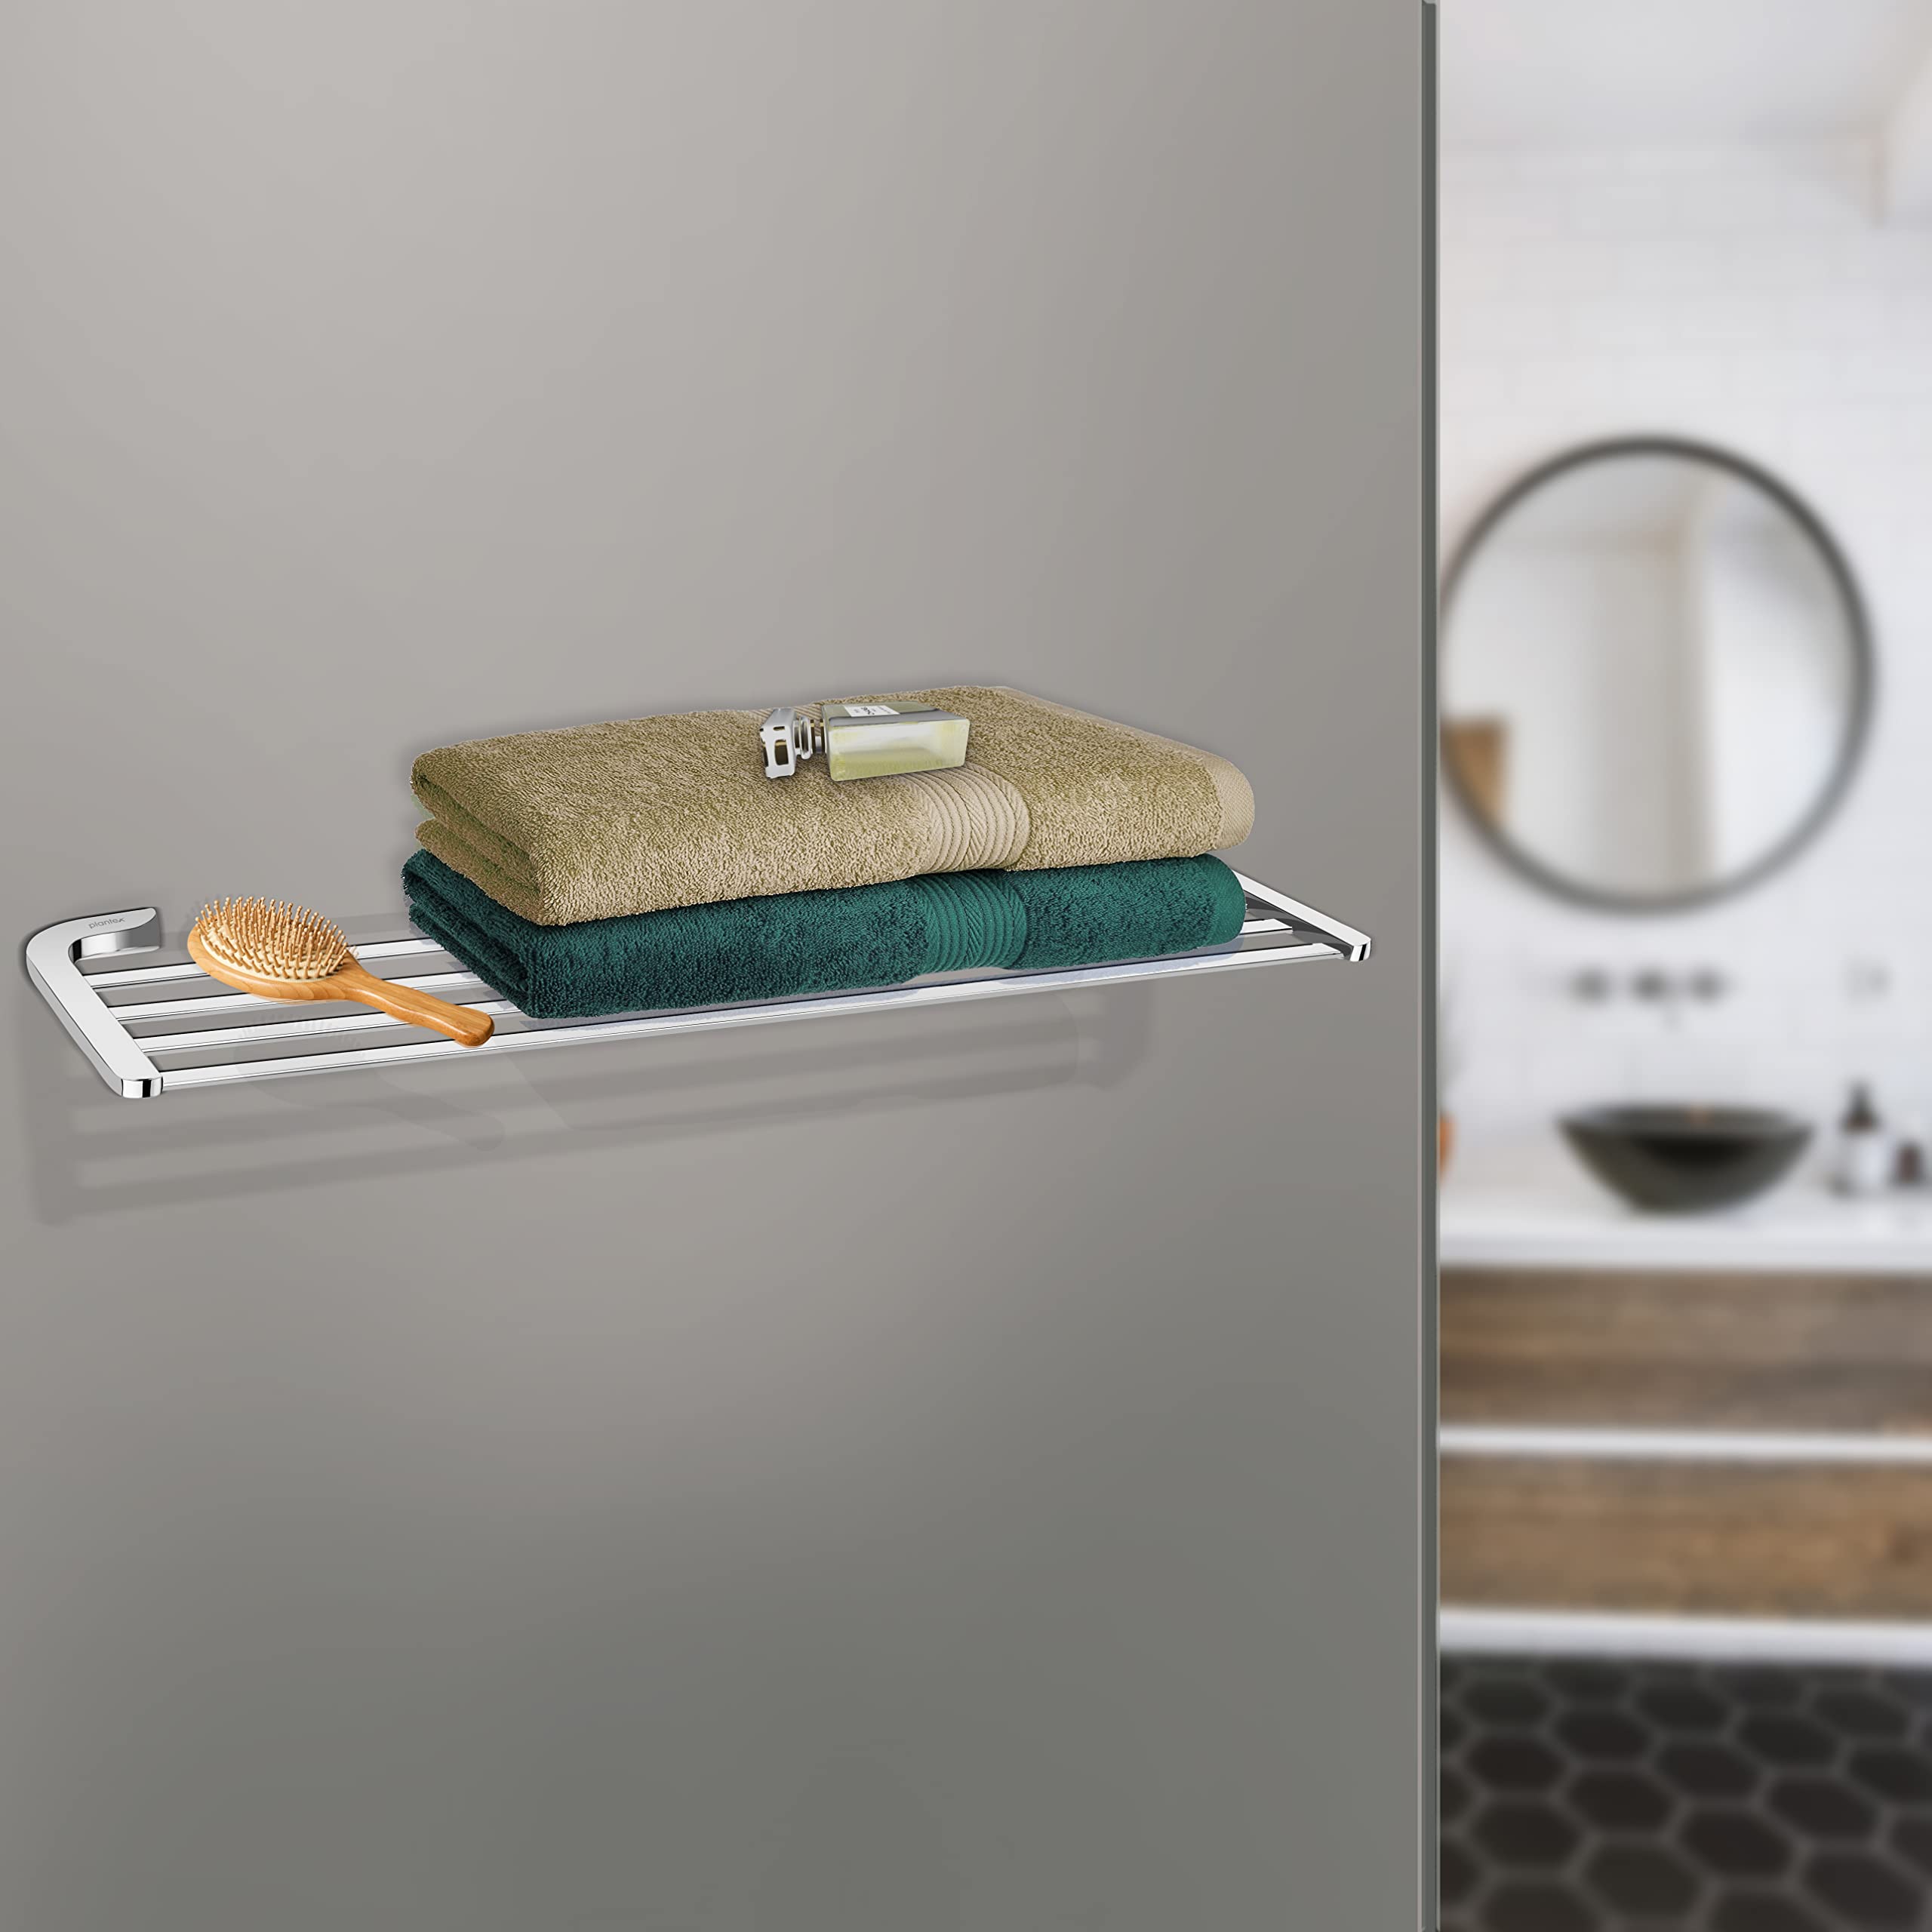 Plantex Fully Brass Smero Towel Rack/Towel Stand/Hanger/Holder Bathroom Accessories - 24 Inch,Chrome (AQ-8131)